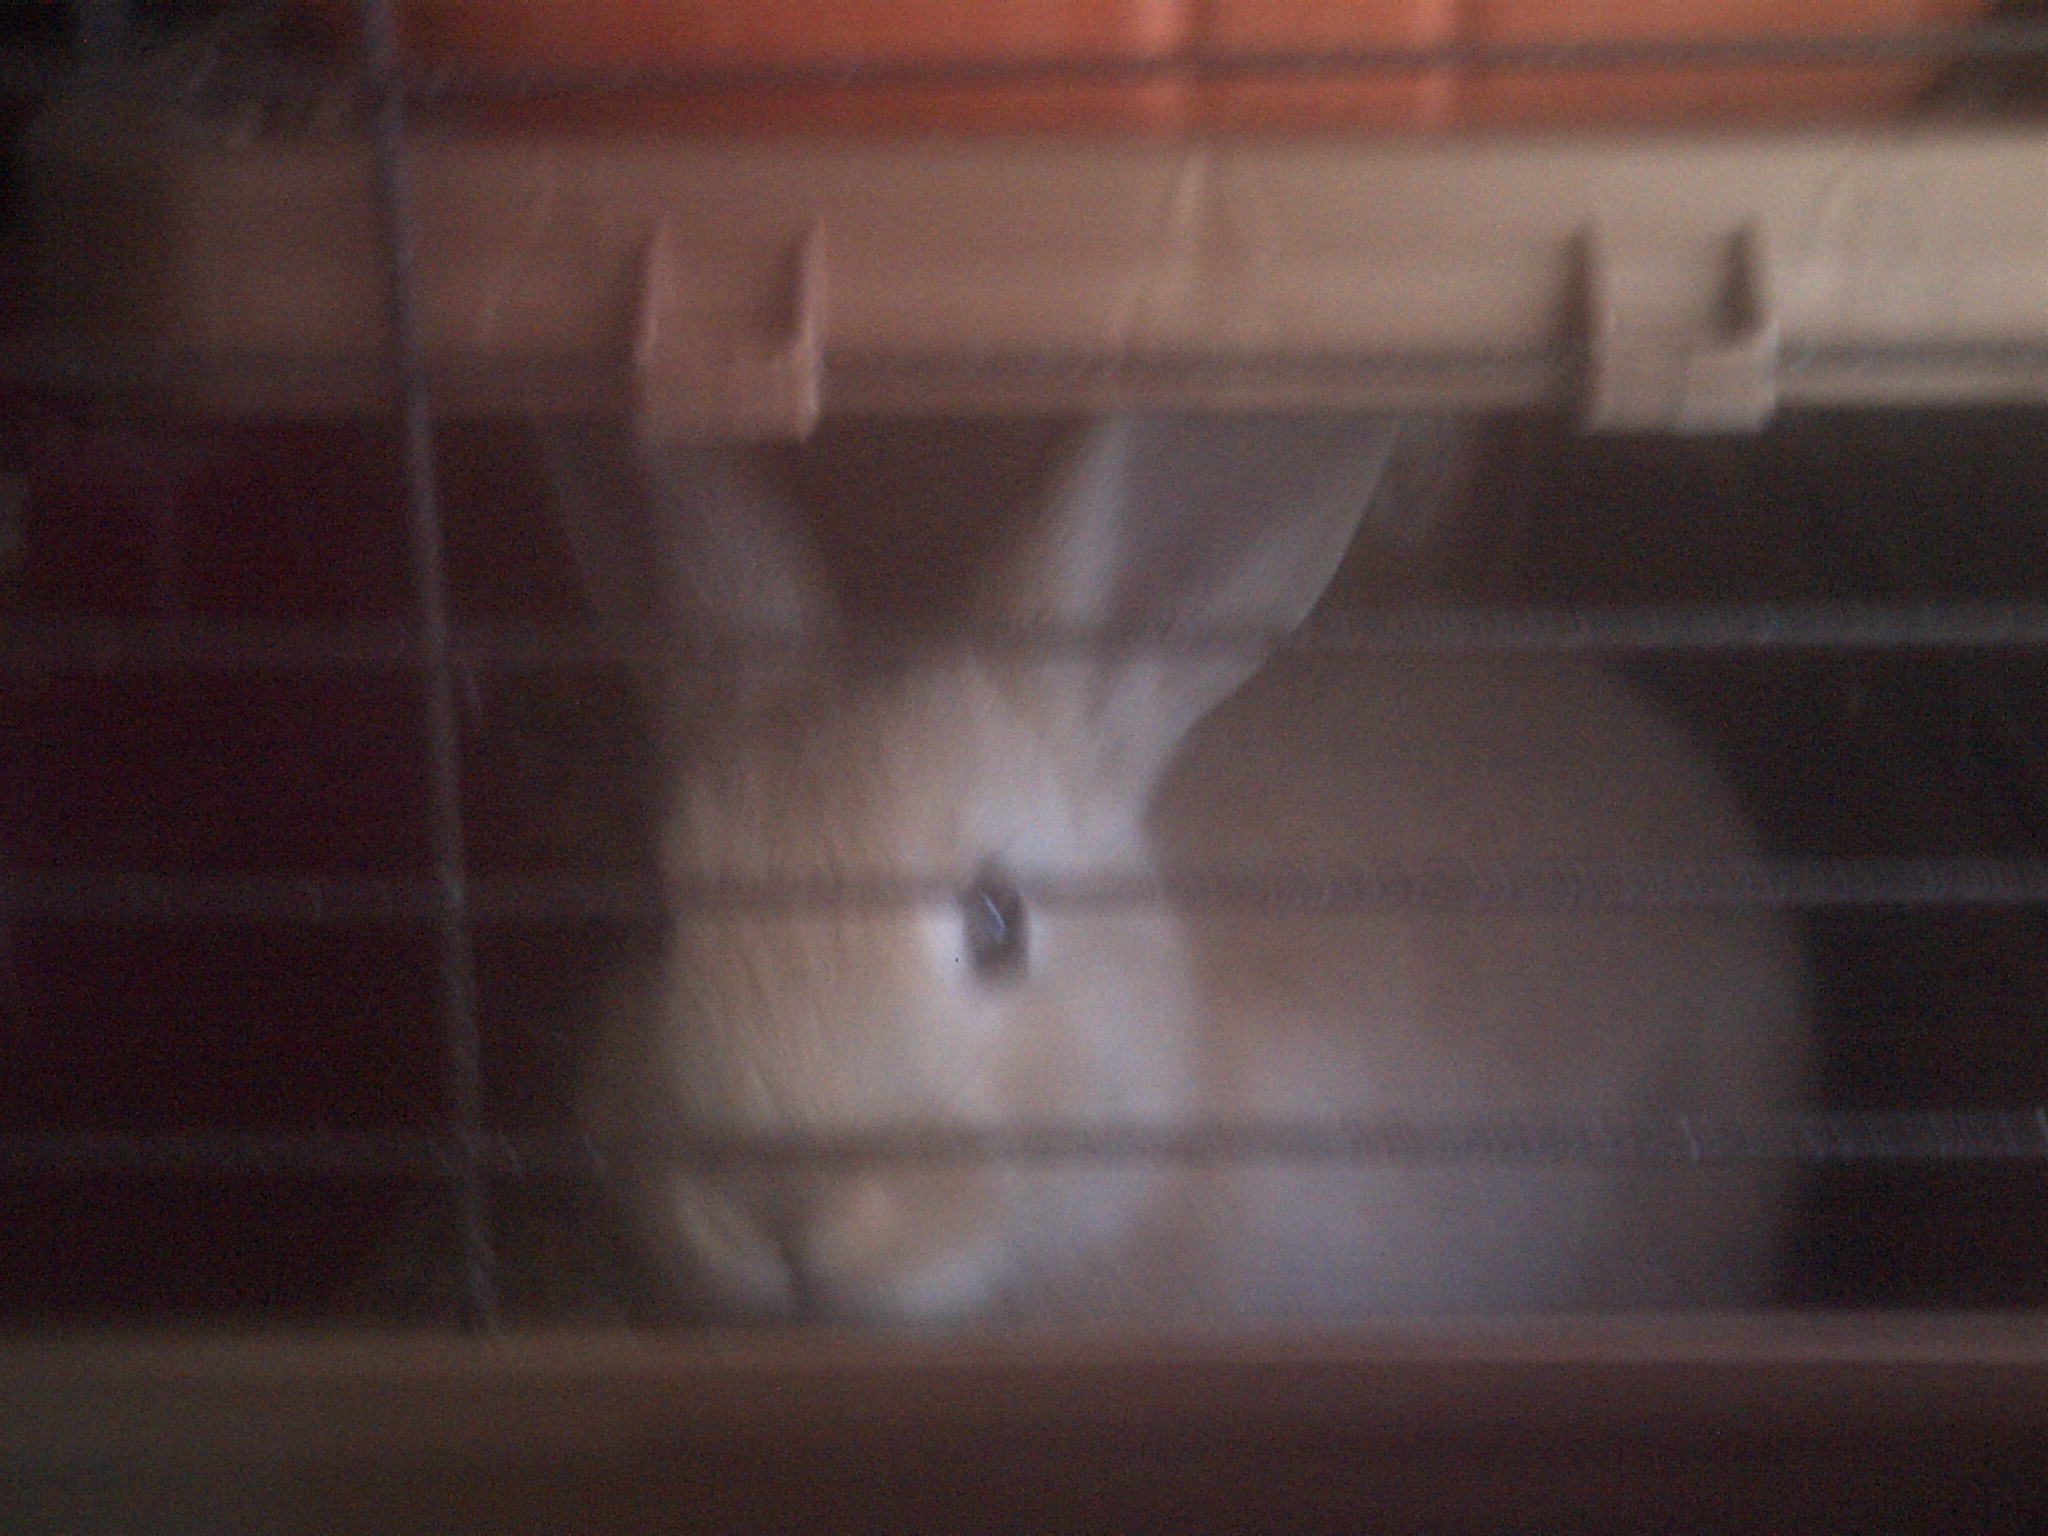 Chloe the bunny